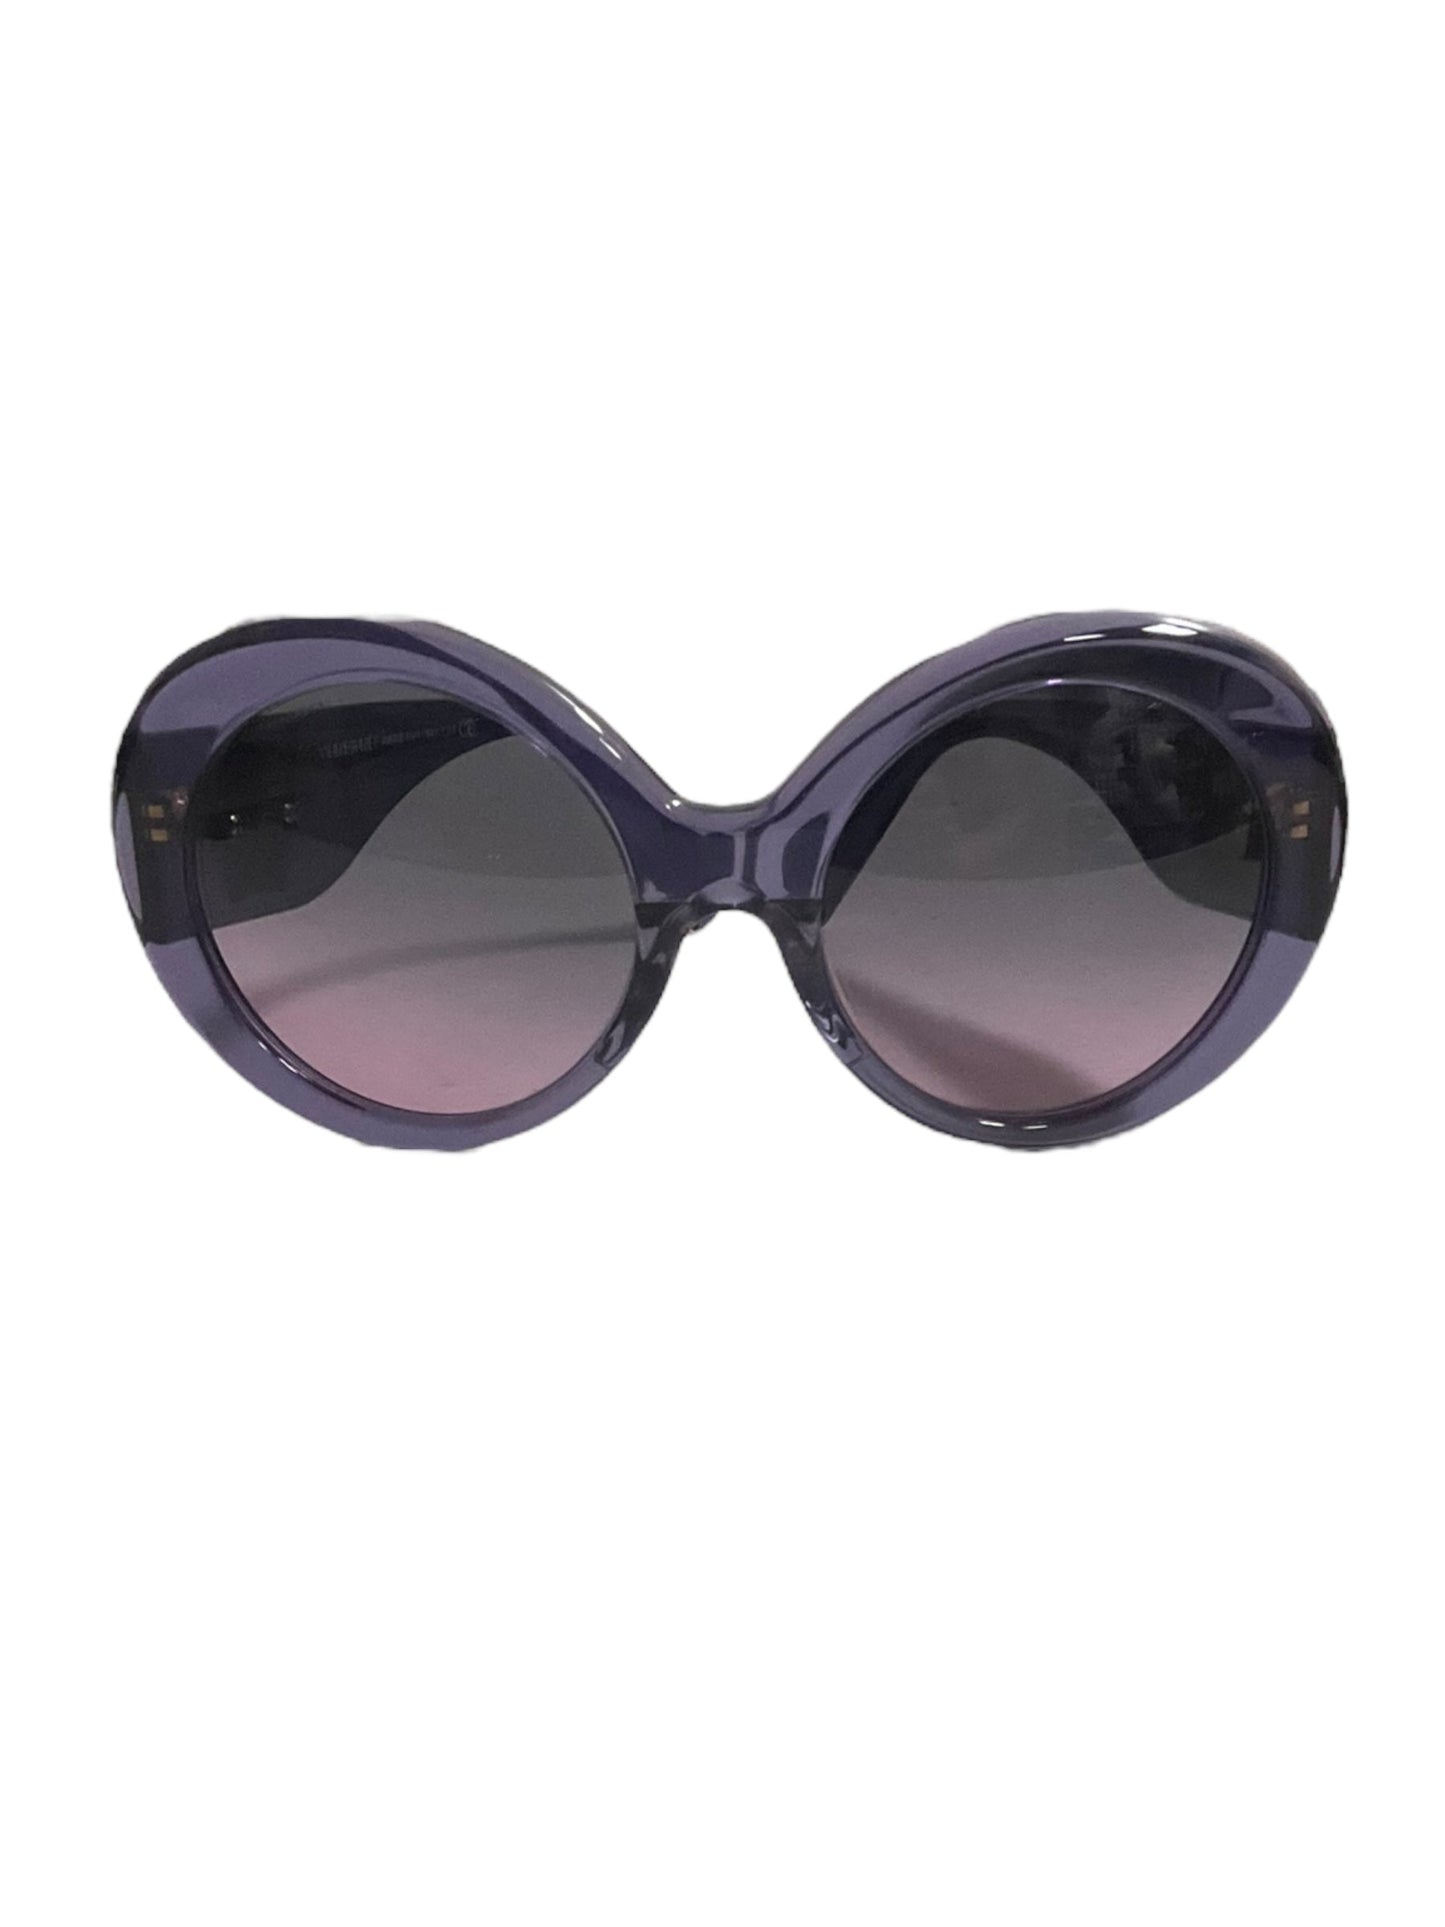 Sunglasses Luxury Designer Versace